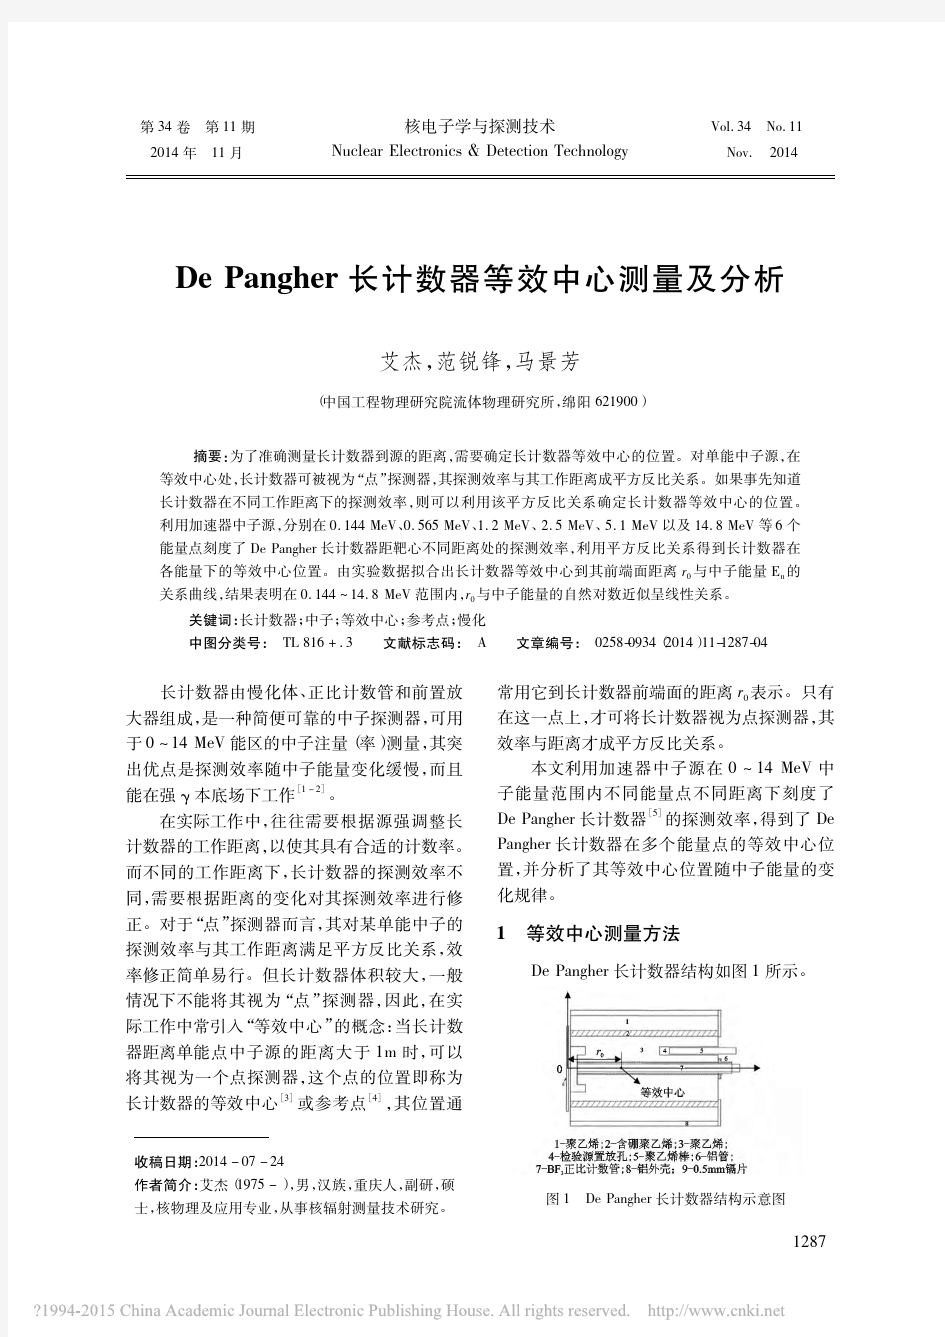 DePangher长计数器等效中心测量及分析